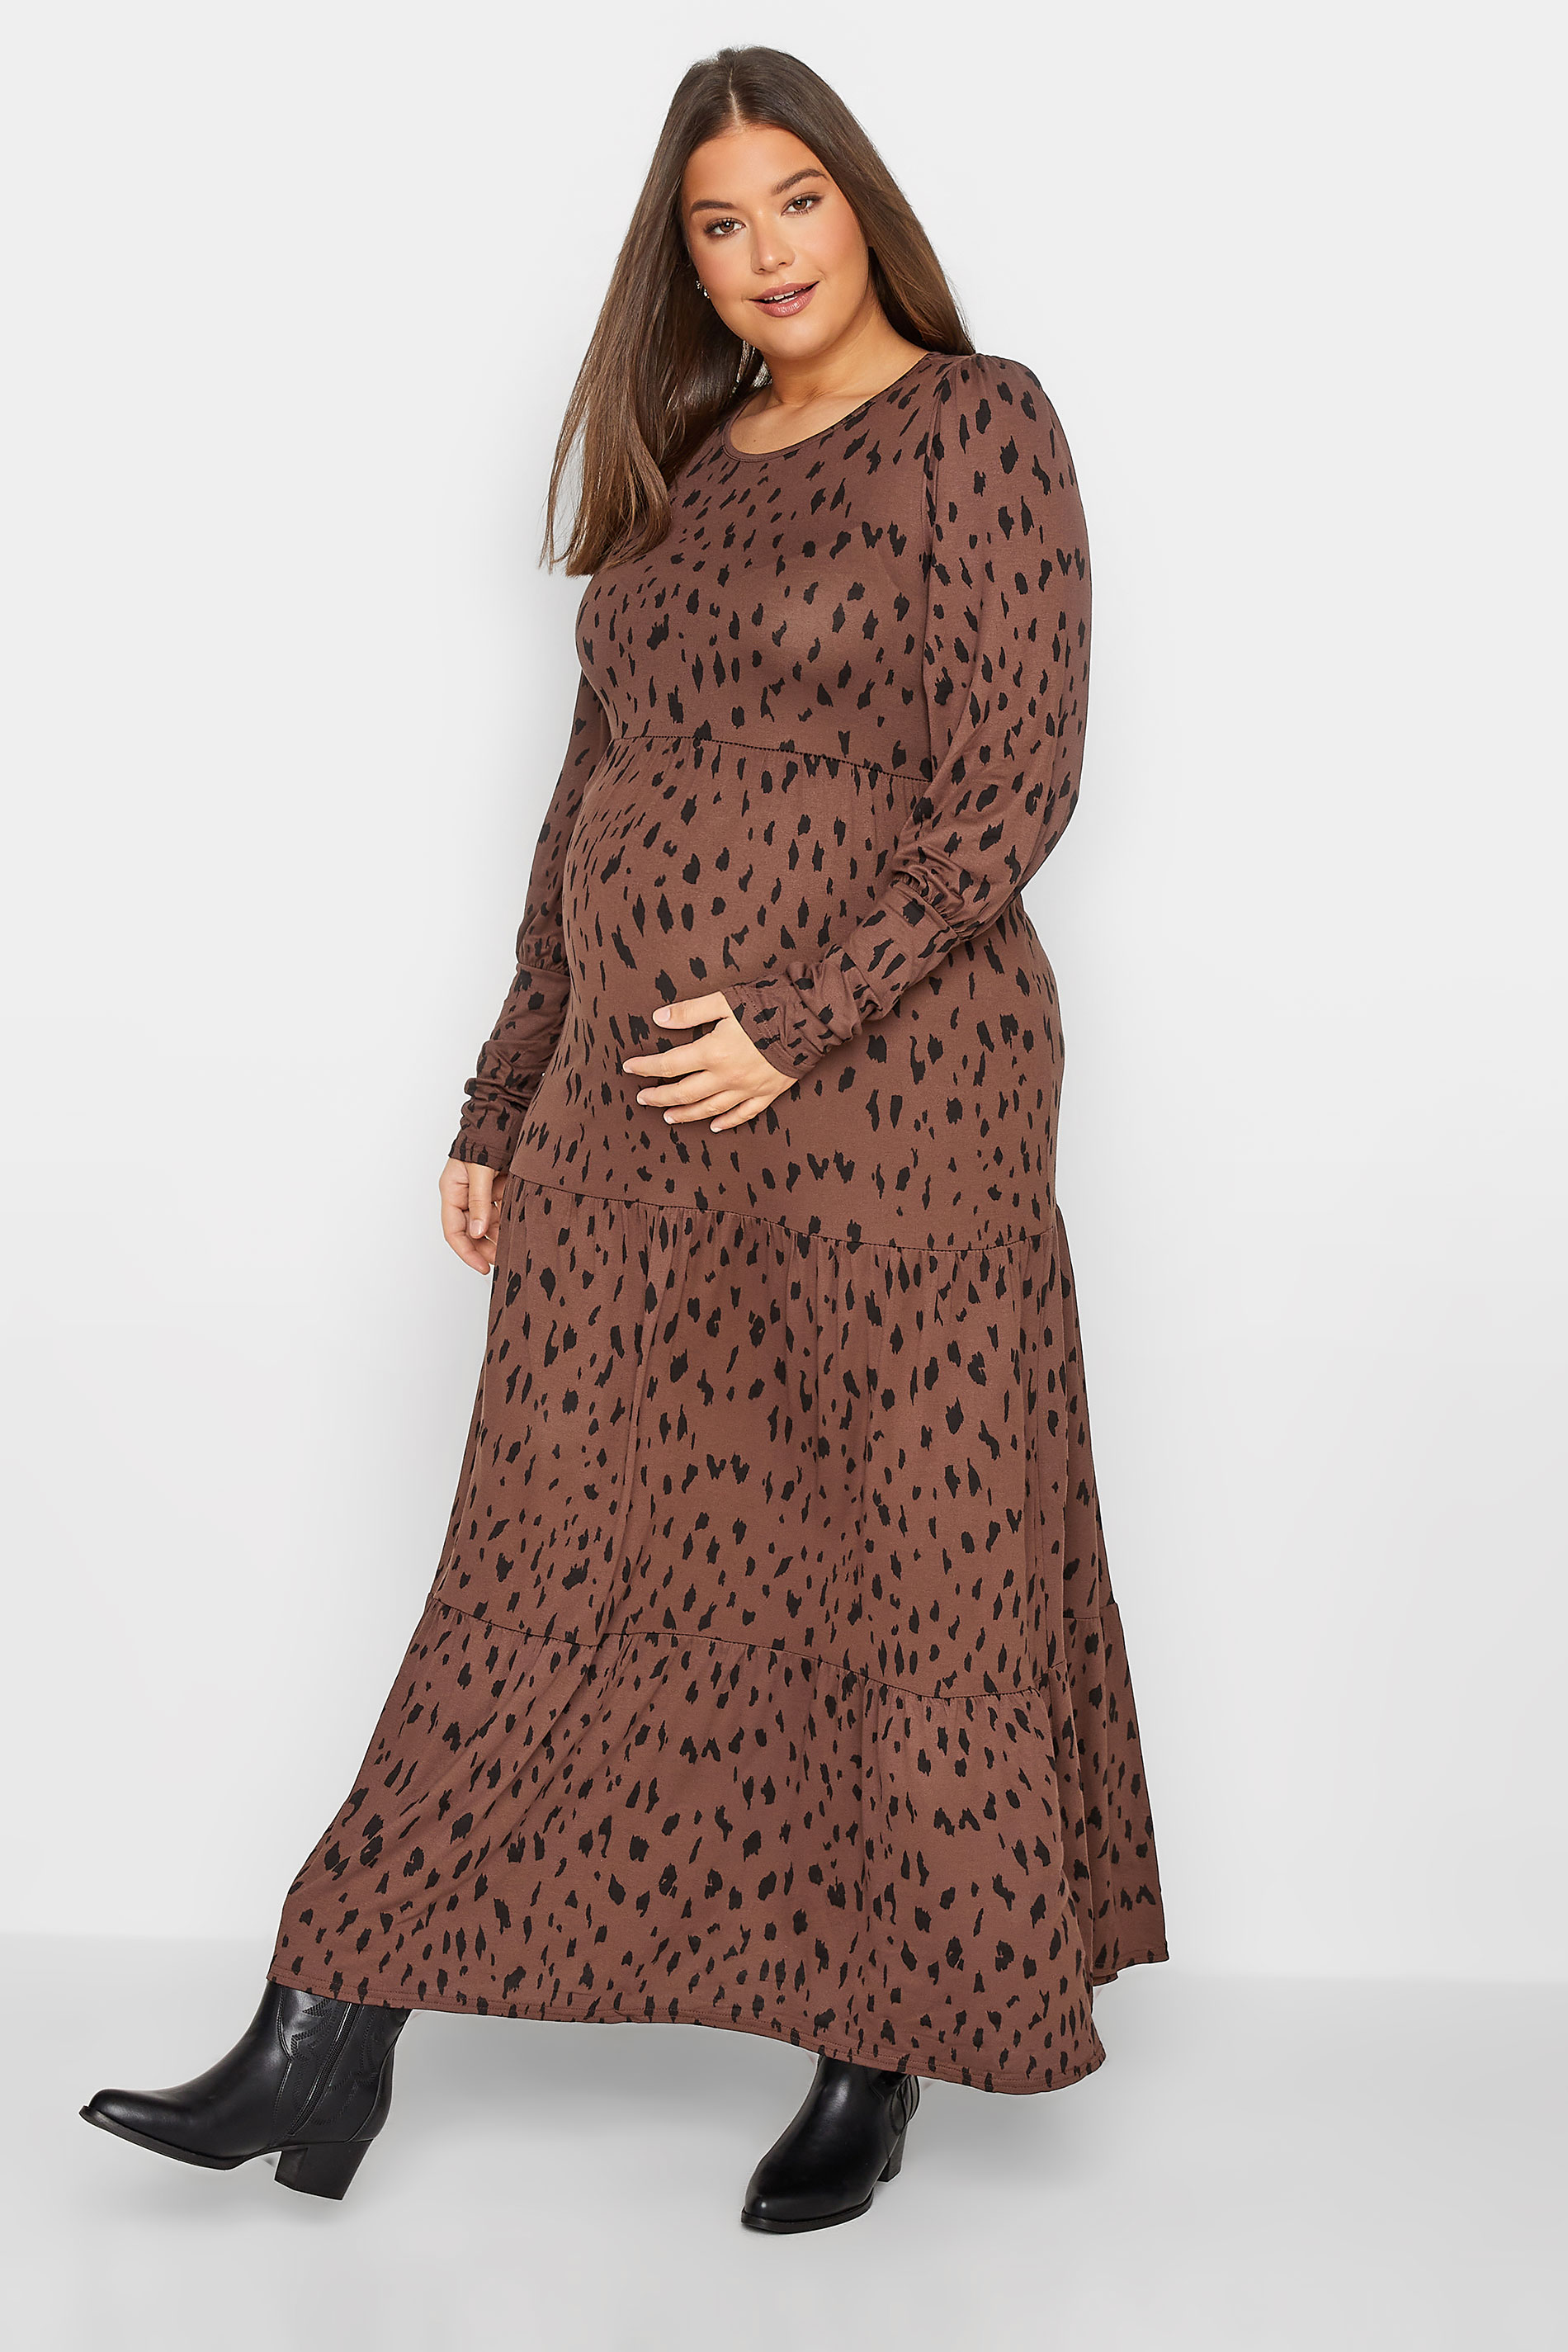 Tall Women's LTS Maternity Brown Animal Print Tiered Dress | Long Tall Sally 1